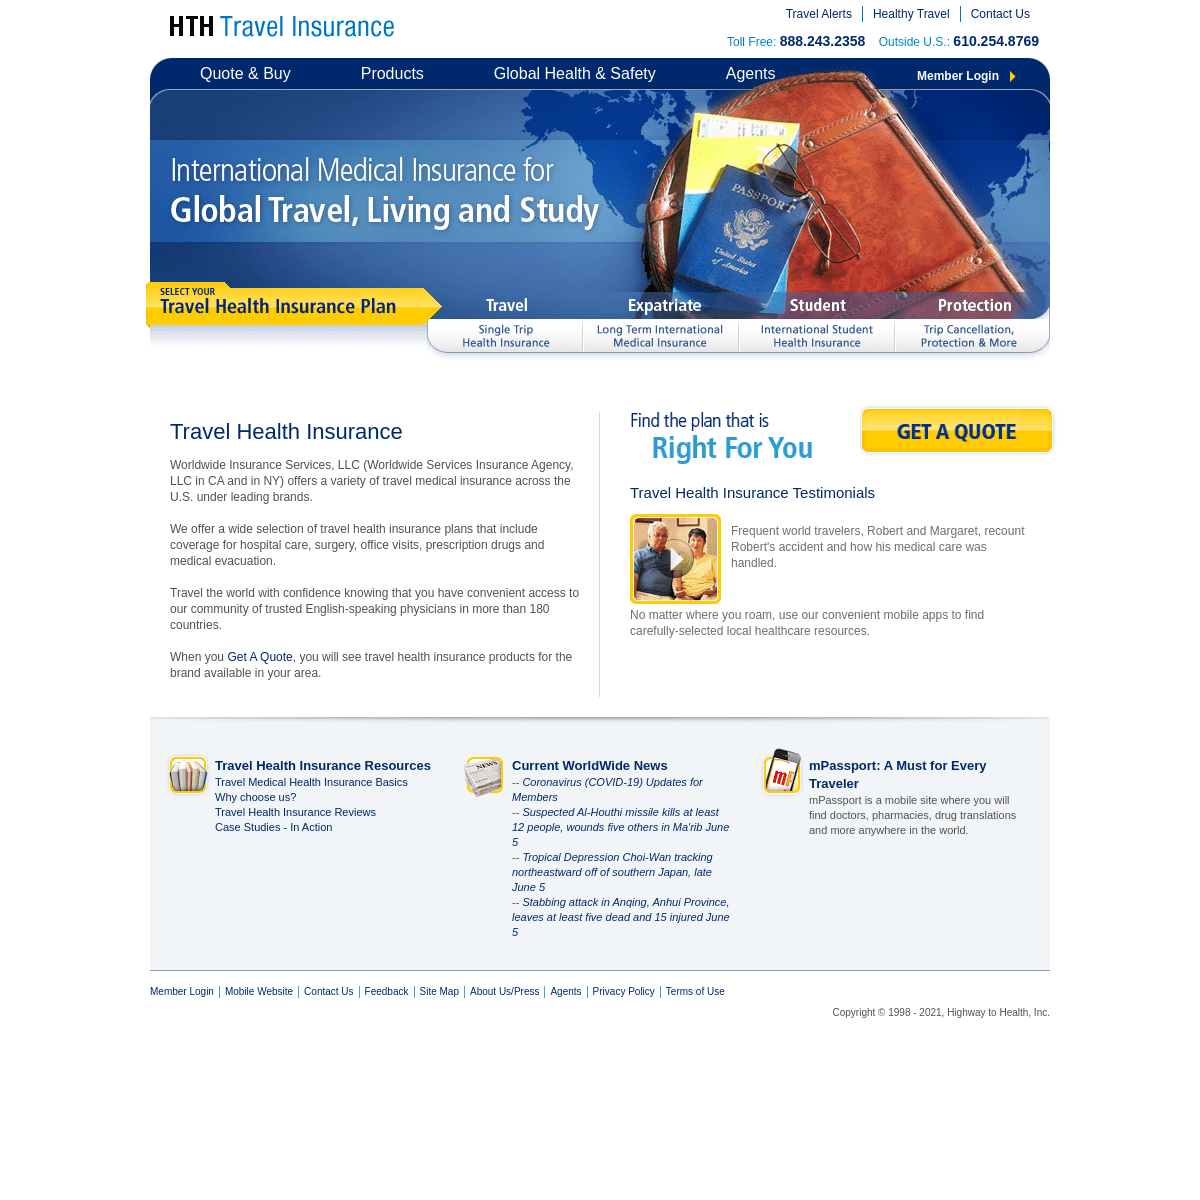 A complete backup of https://hthtravelinsurance.com